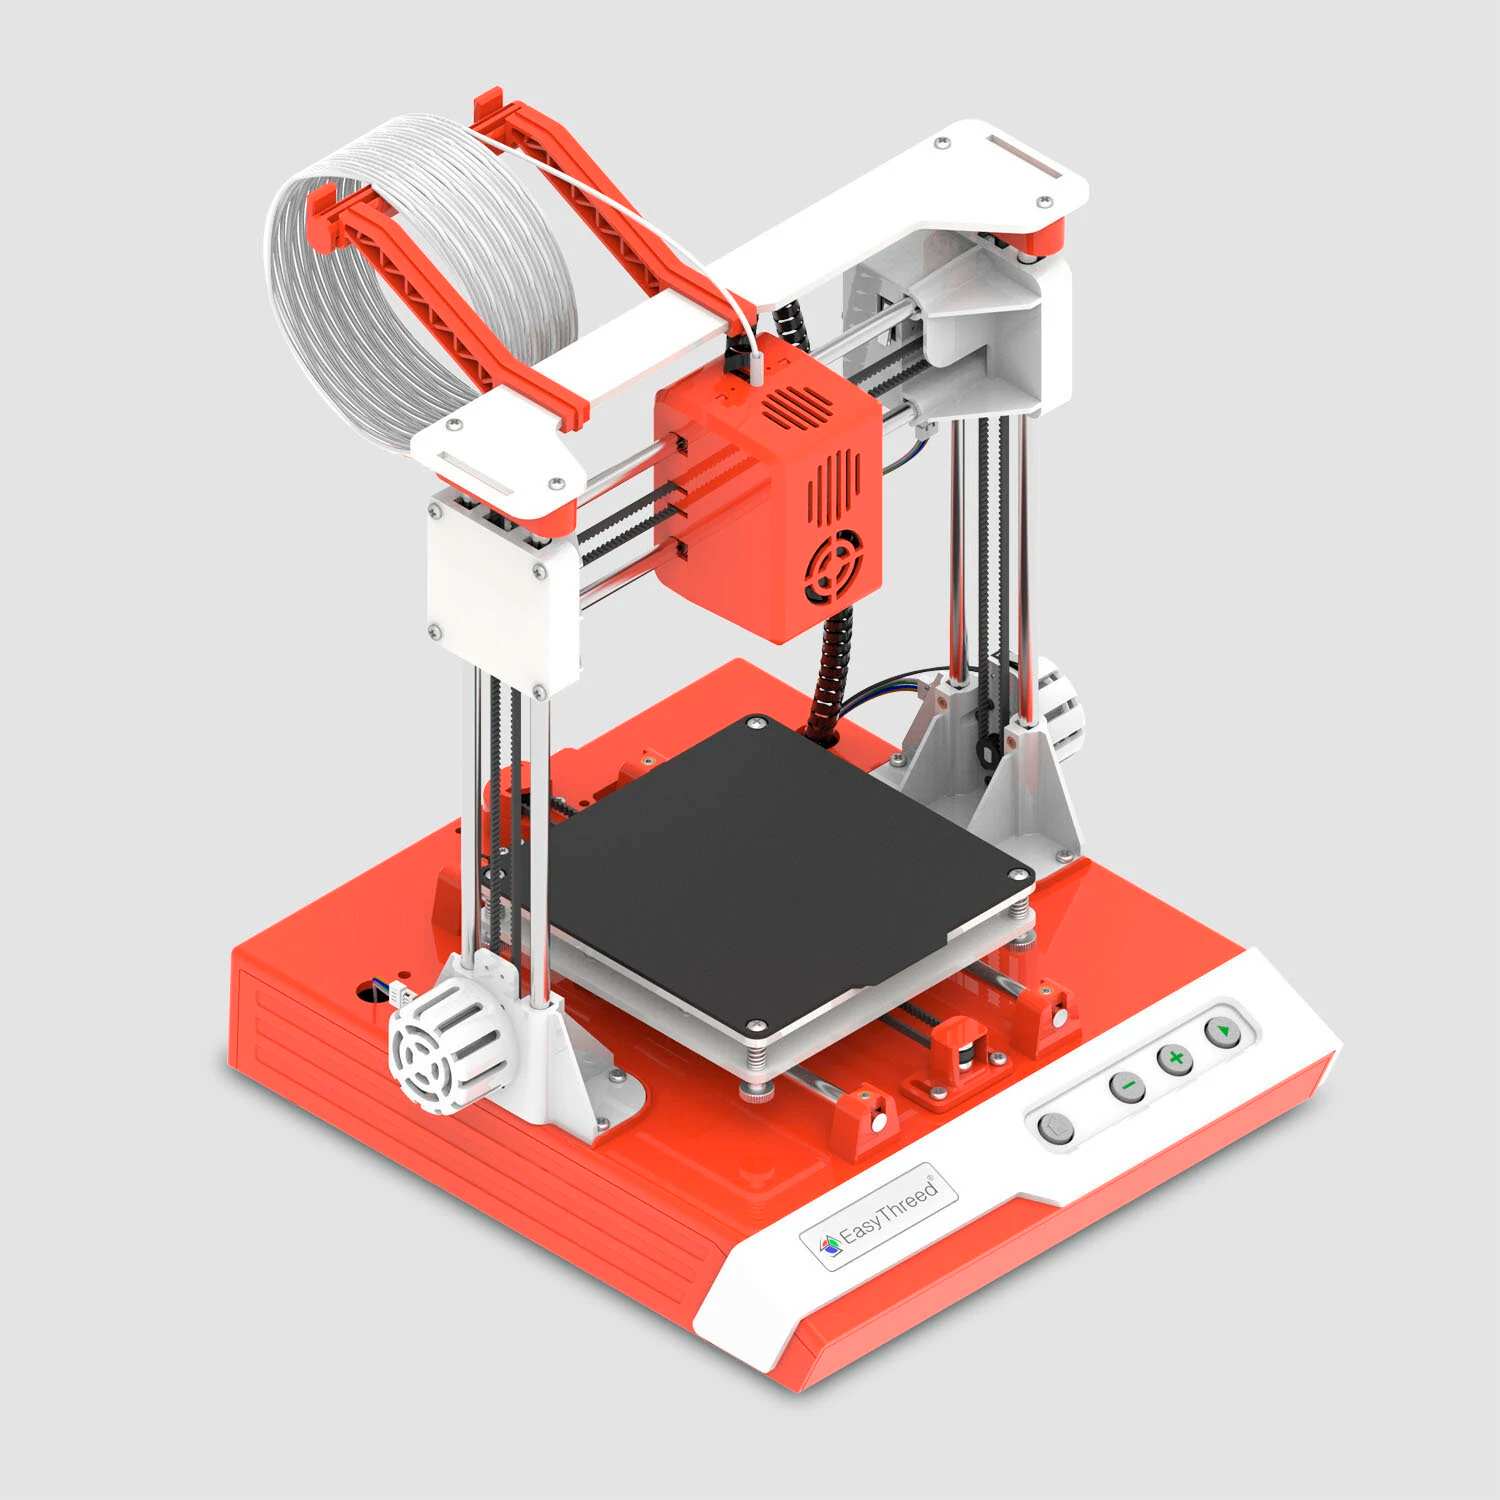 Easythreed K1 Desktop Mini 3D Printer Banggood Coupon Promo Code